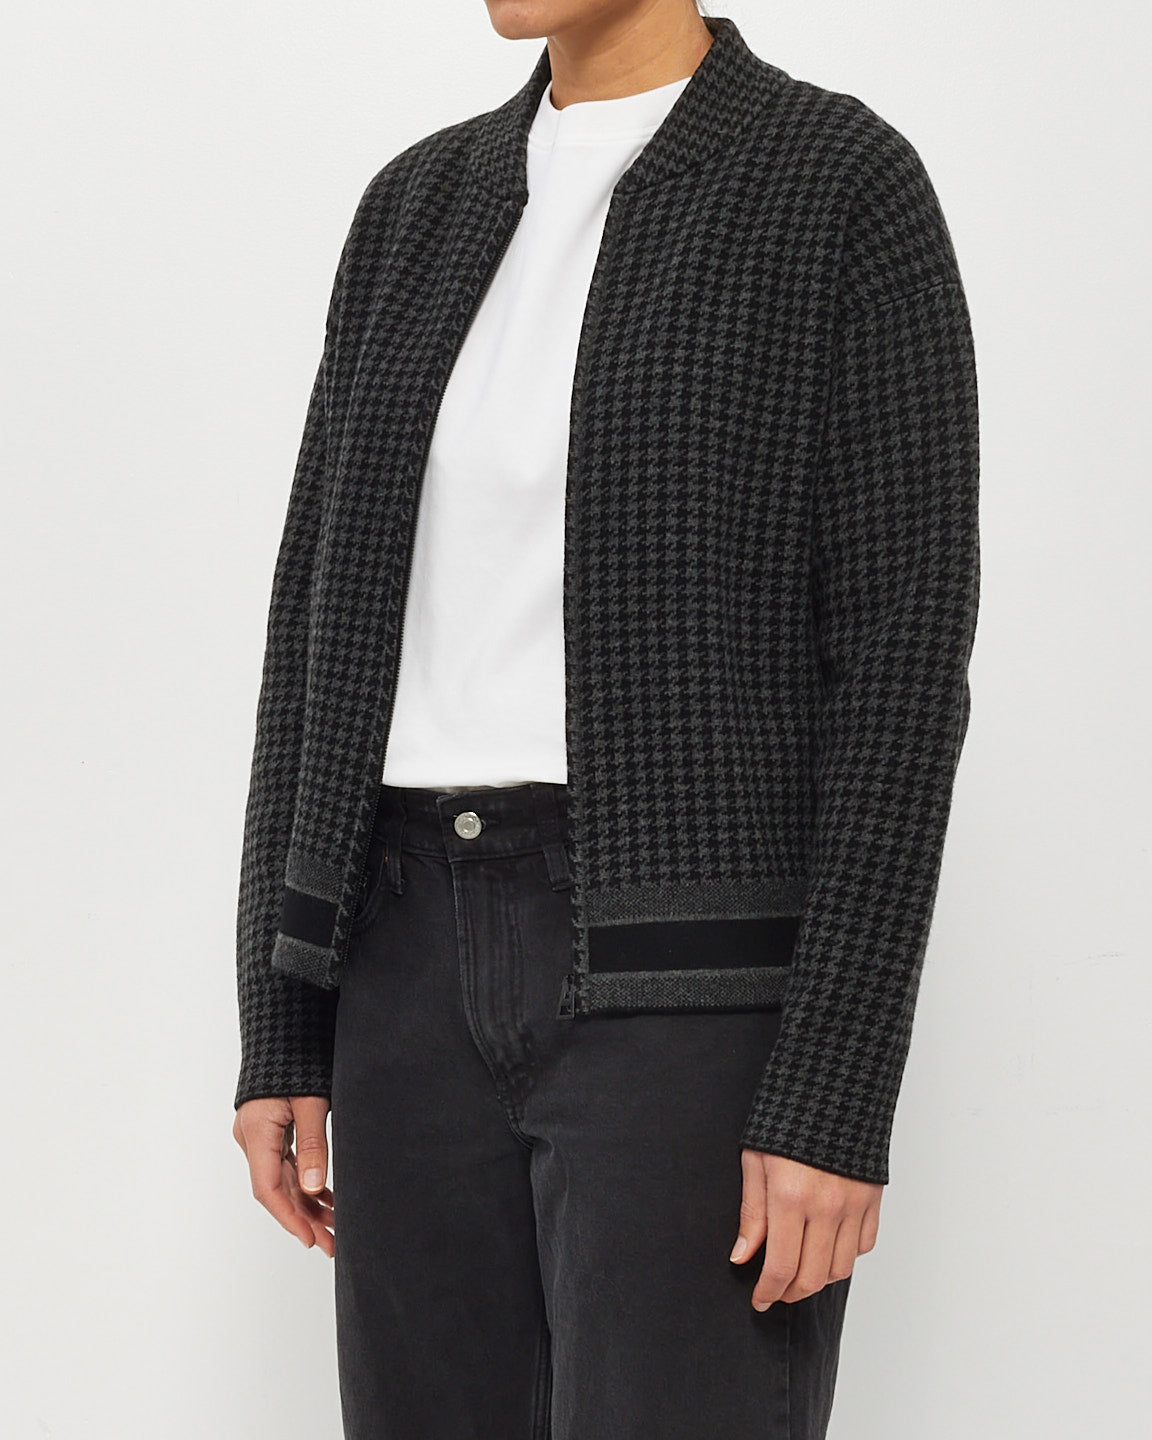 Dior Black/Grey Houndstooth Cashmere Zip Up Sweater - 6US